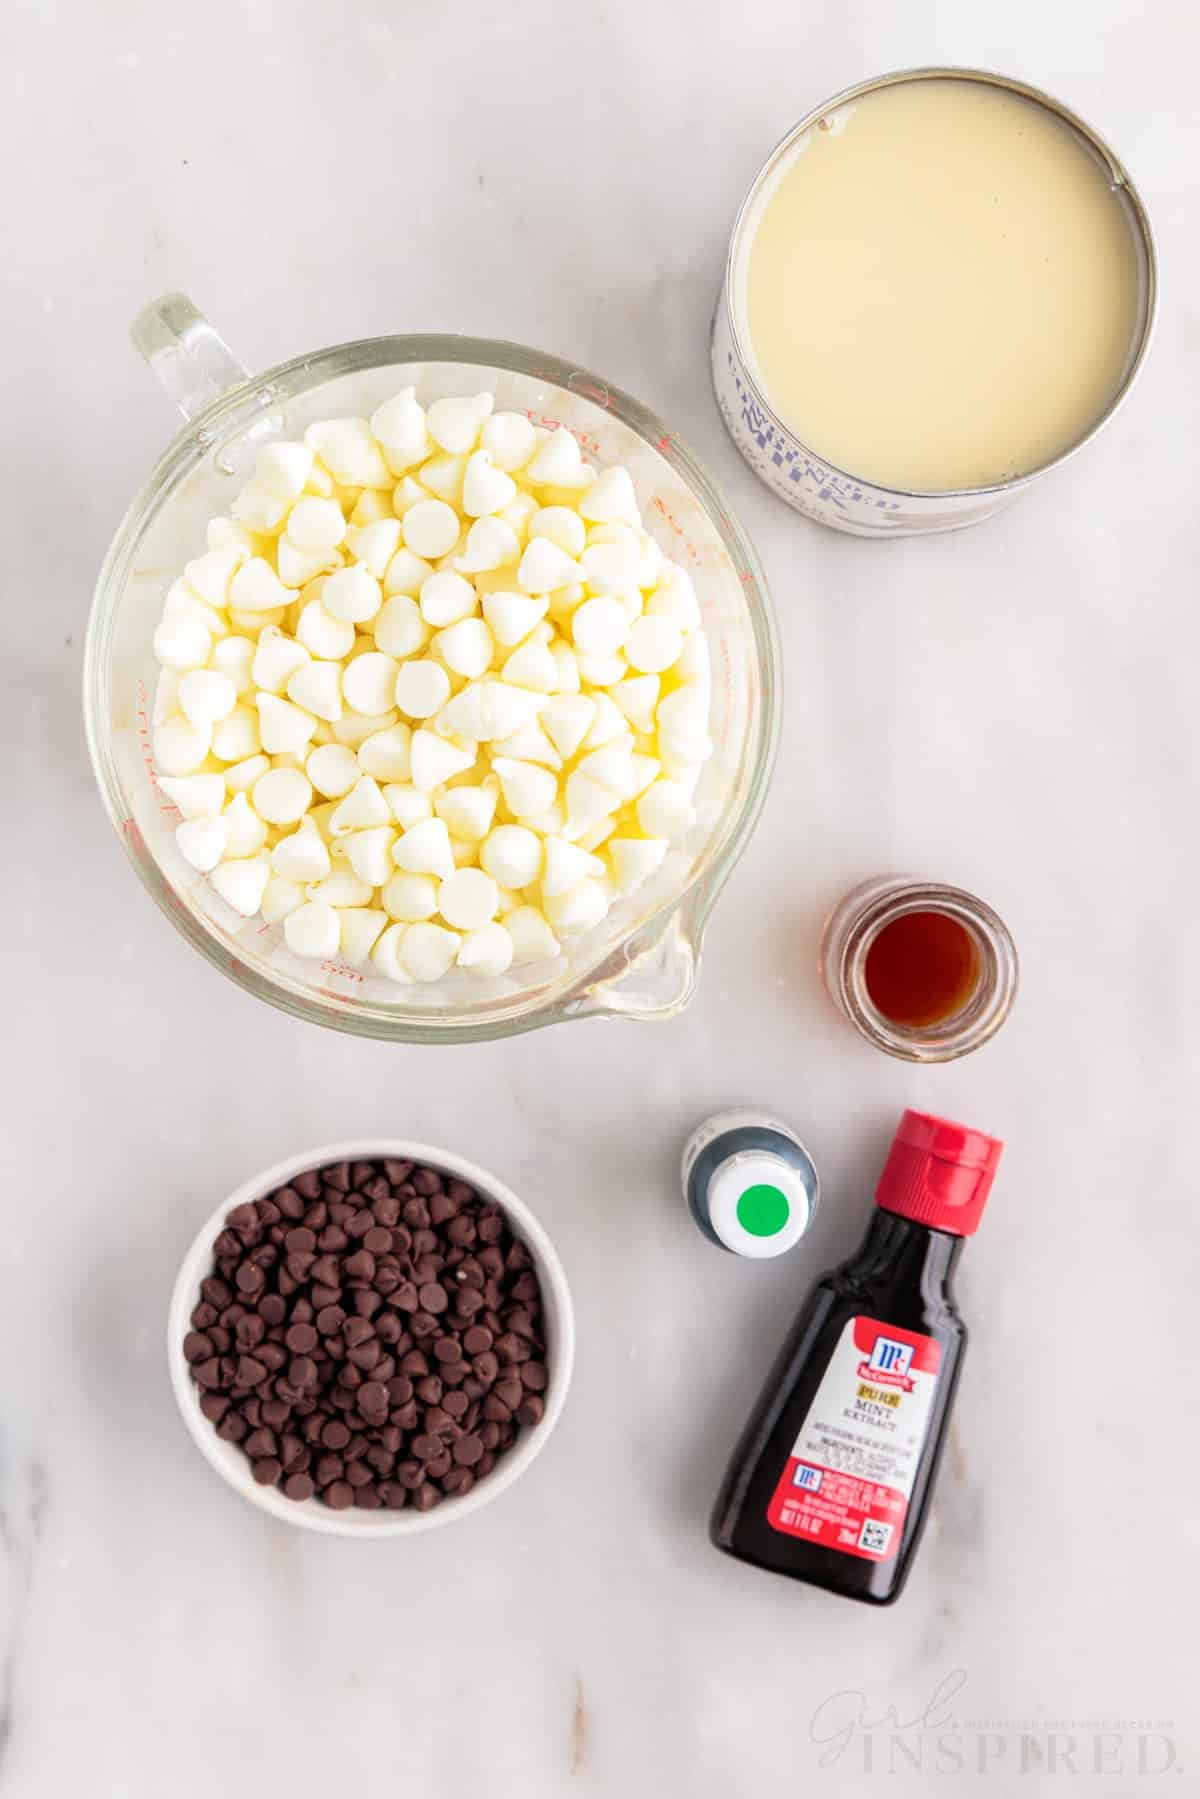 ingredients needed to make mint chocolate chip fudge